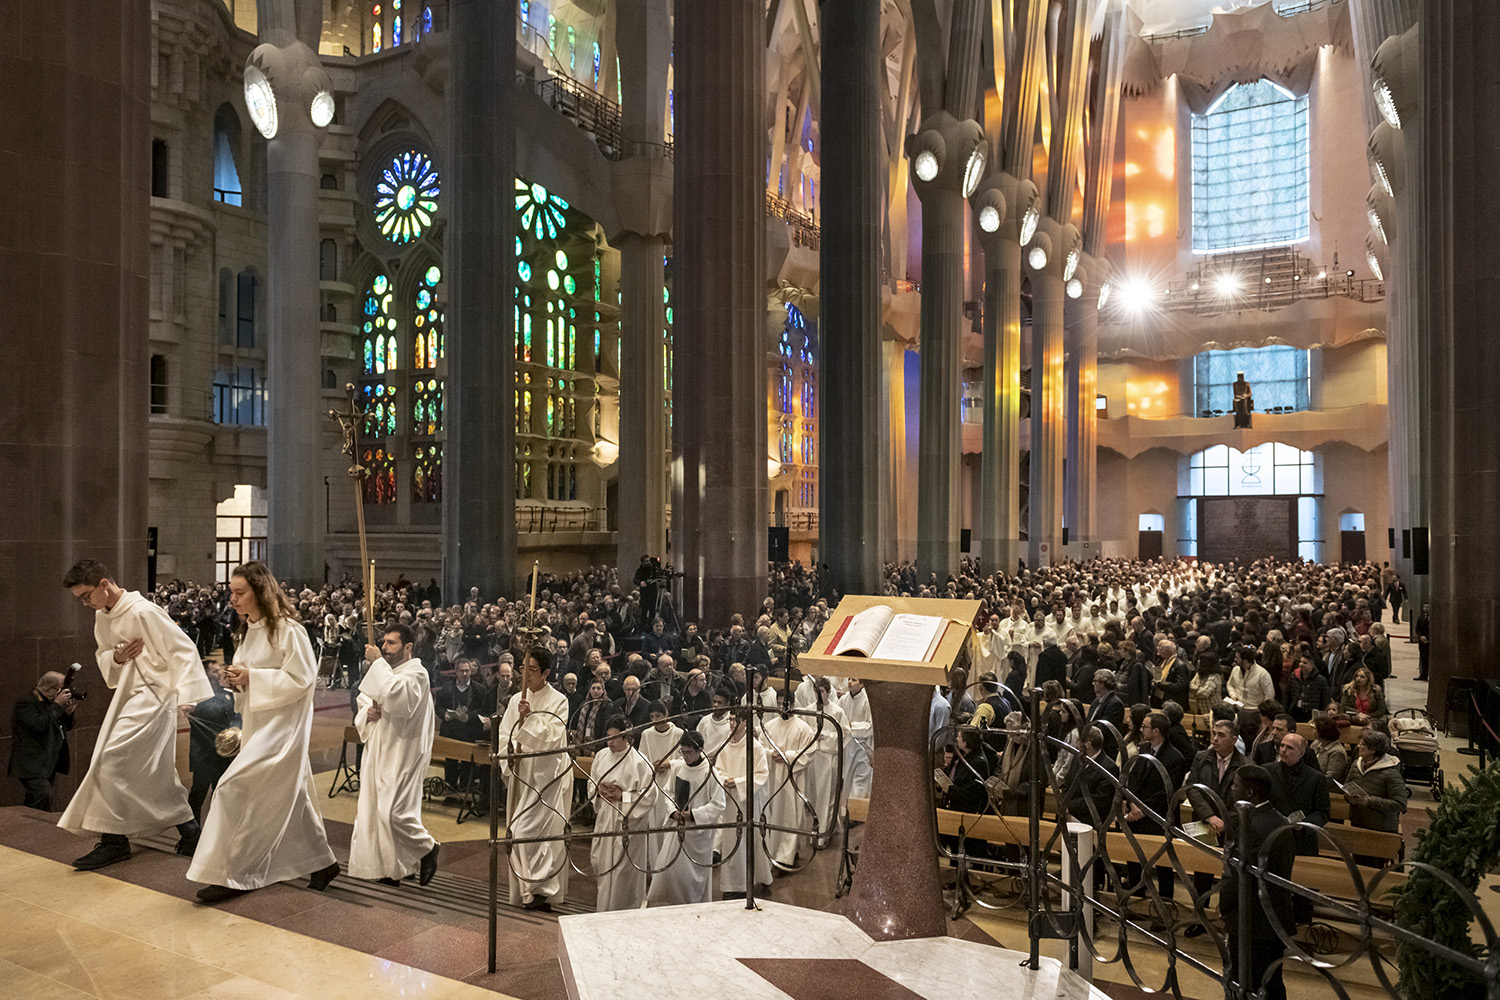 Basilica hosts Religious Celebration of the Holy Family